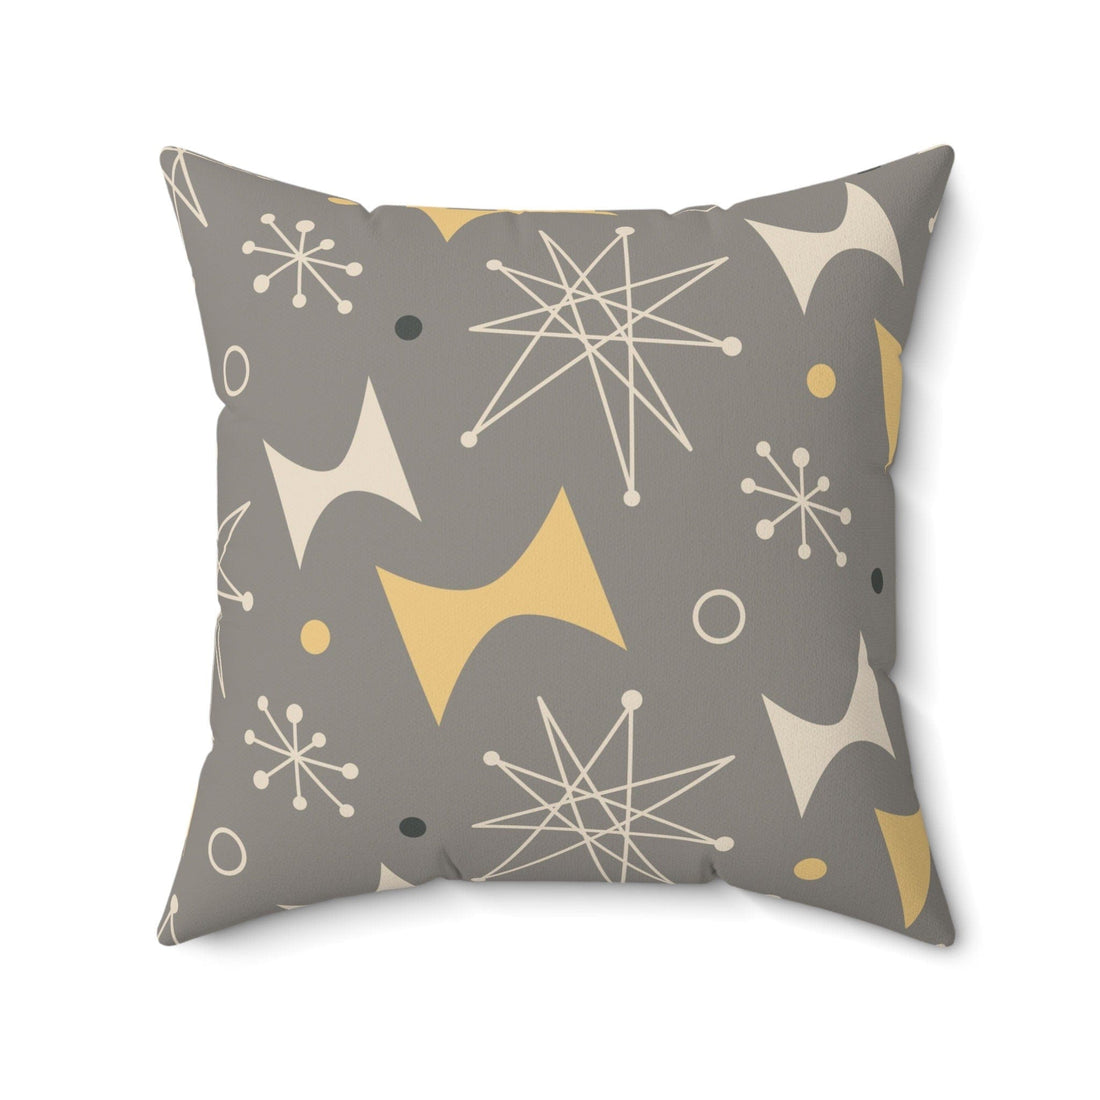 Kate McEnroe New York Retro 1950s Atomic Starburst Throw Pillow with Insert, Mid Century Modern Gray, Mustard Yellow, Sputnik Accent Pillows, Atomic Age DecorThrow Pillows11502155934158690097